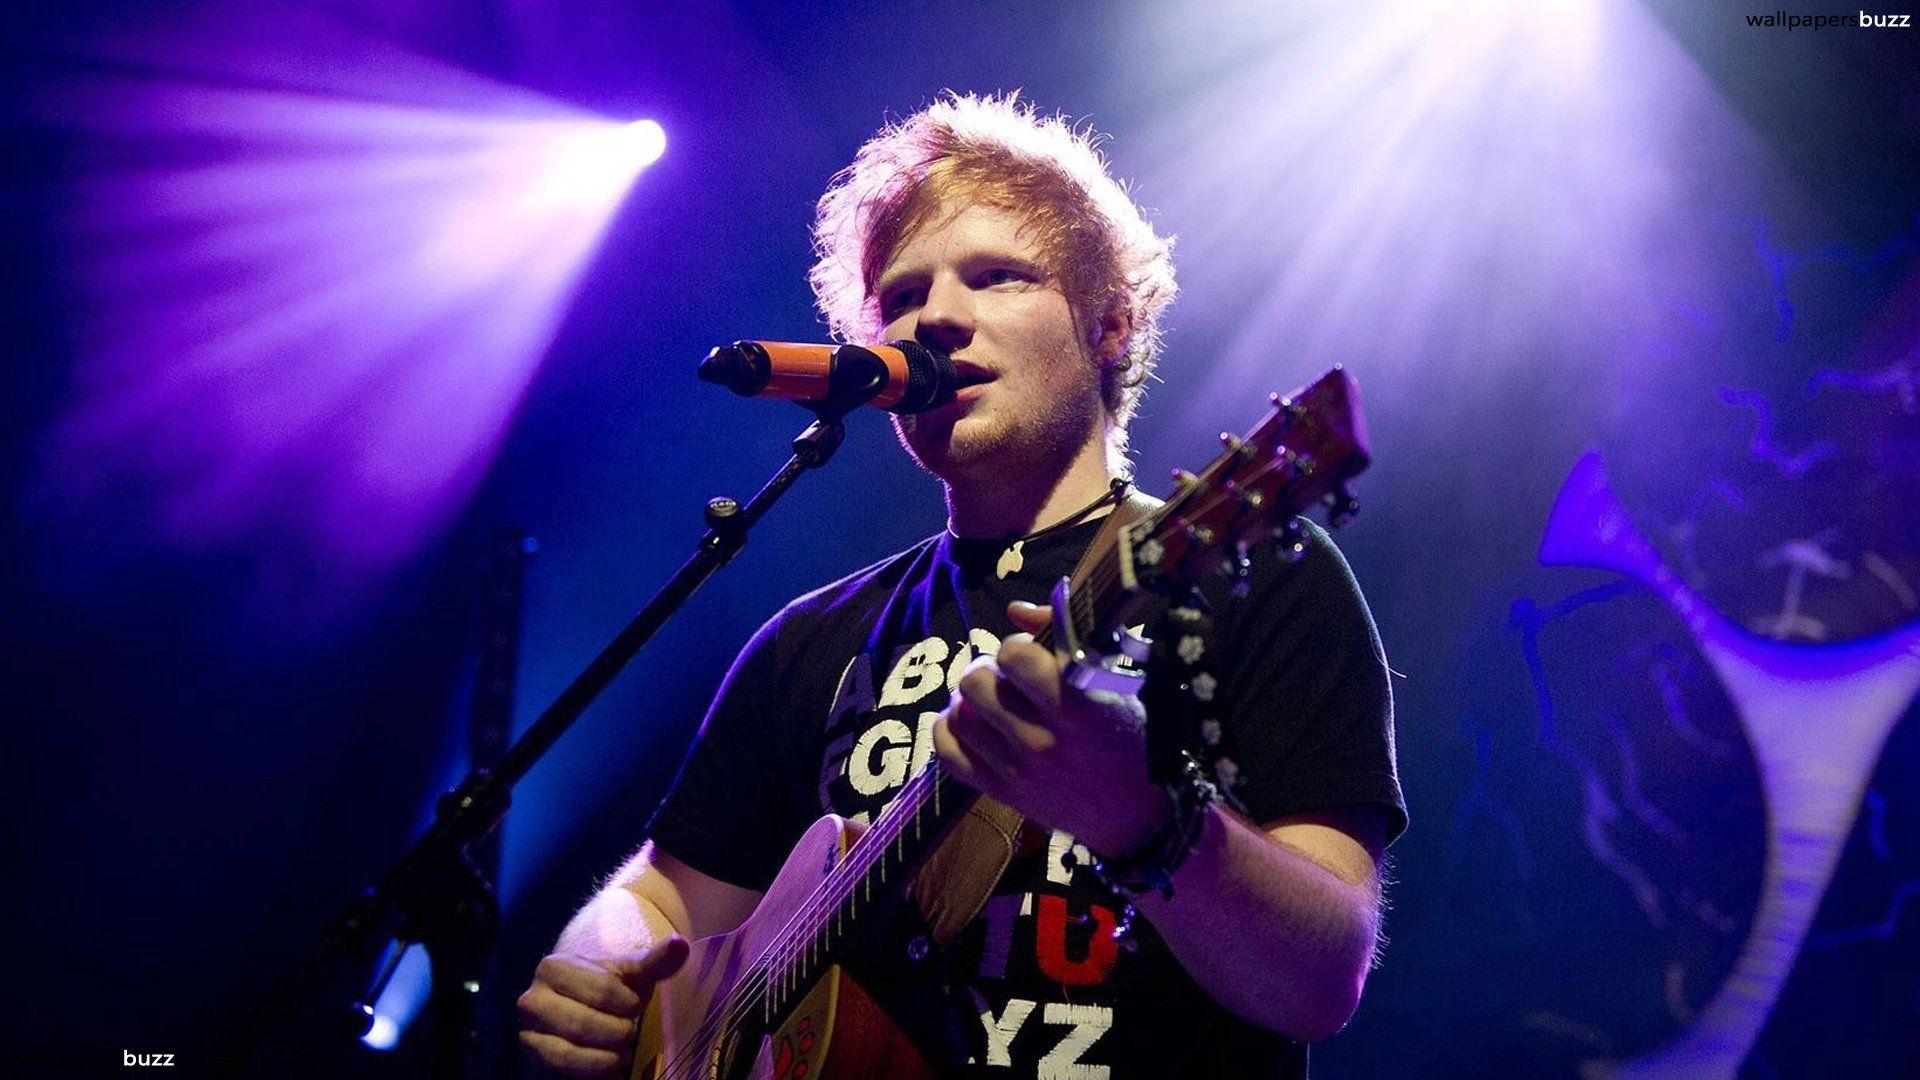 Ed Sheeran on the stage HD Wallpaper